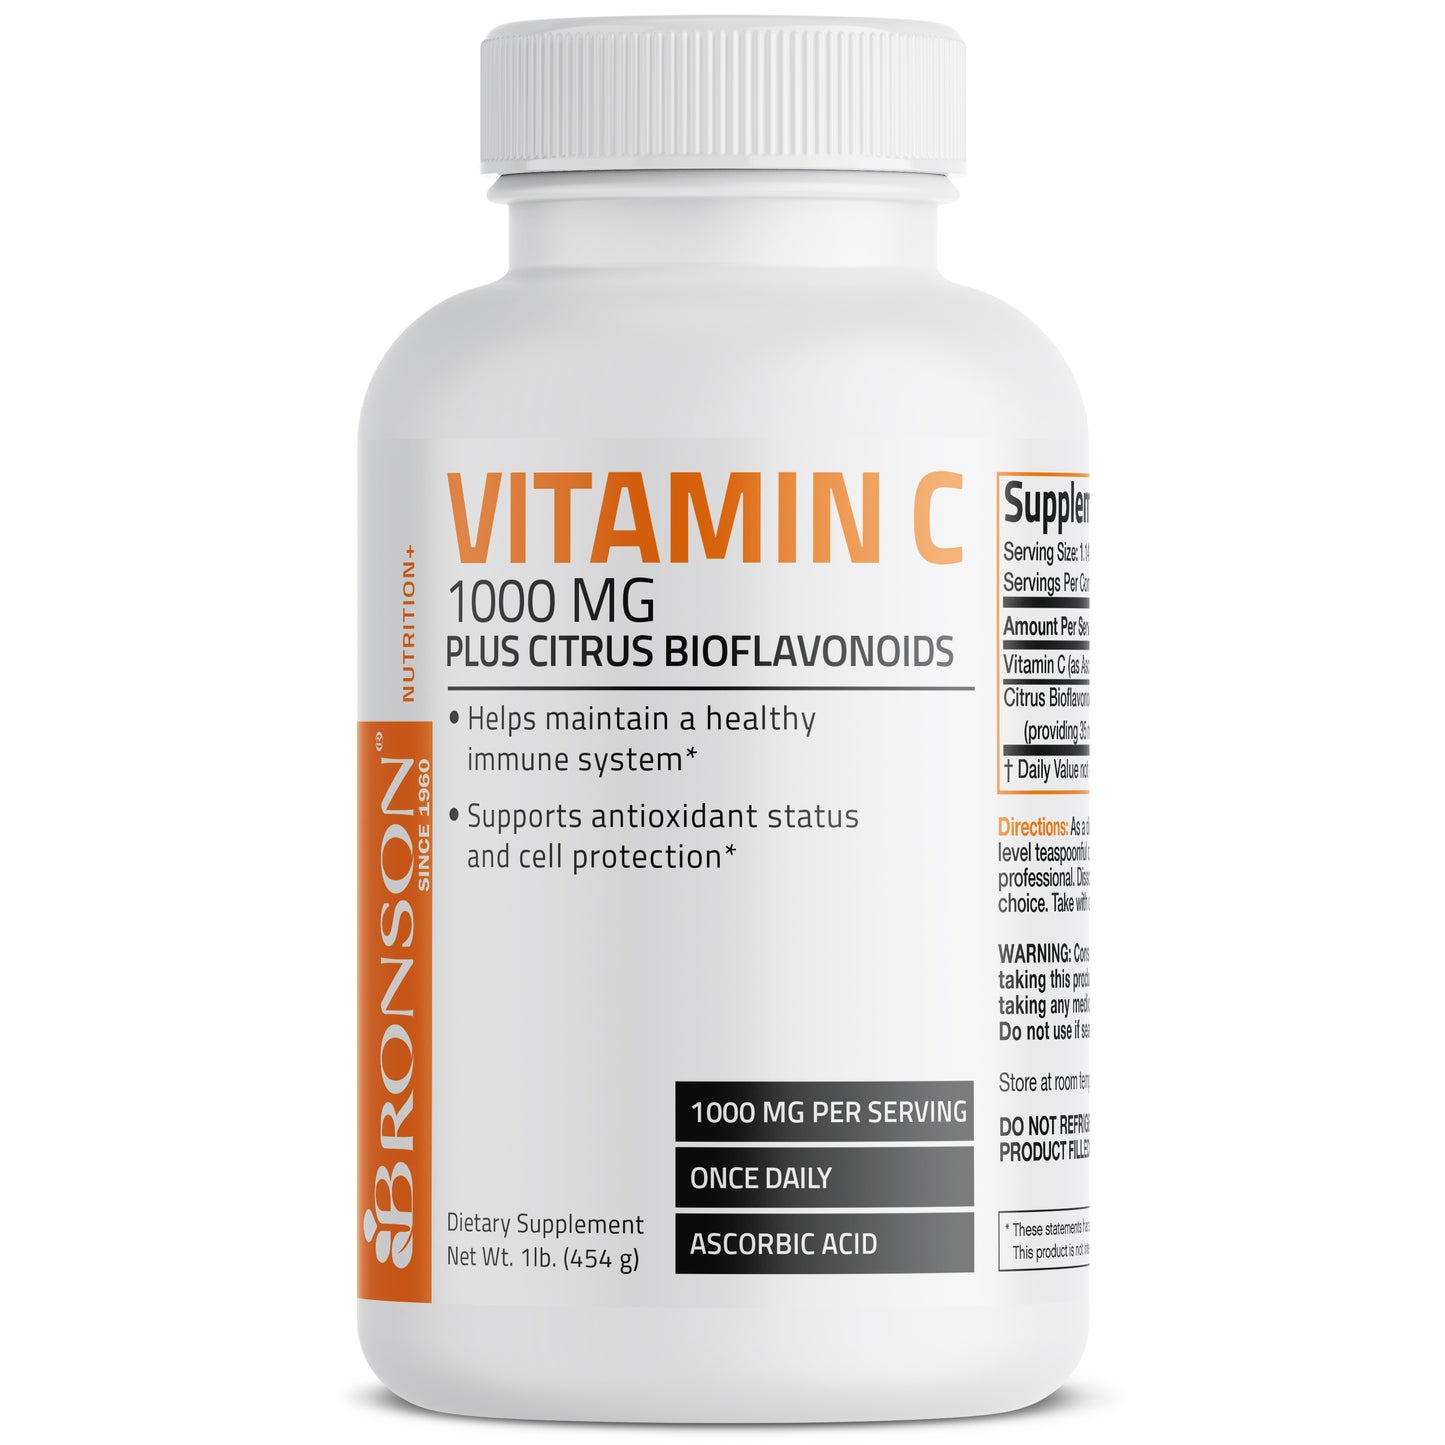 Vitamin C Ascorbic Acid Crystals with Citrus Bioflavonoids - 1,000 mg - 1 lb (454g)